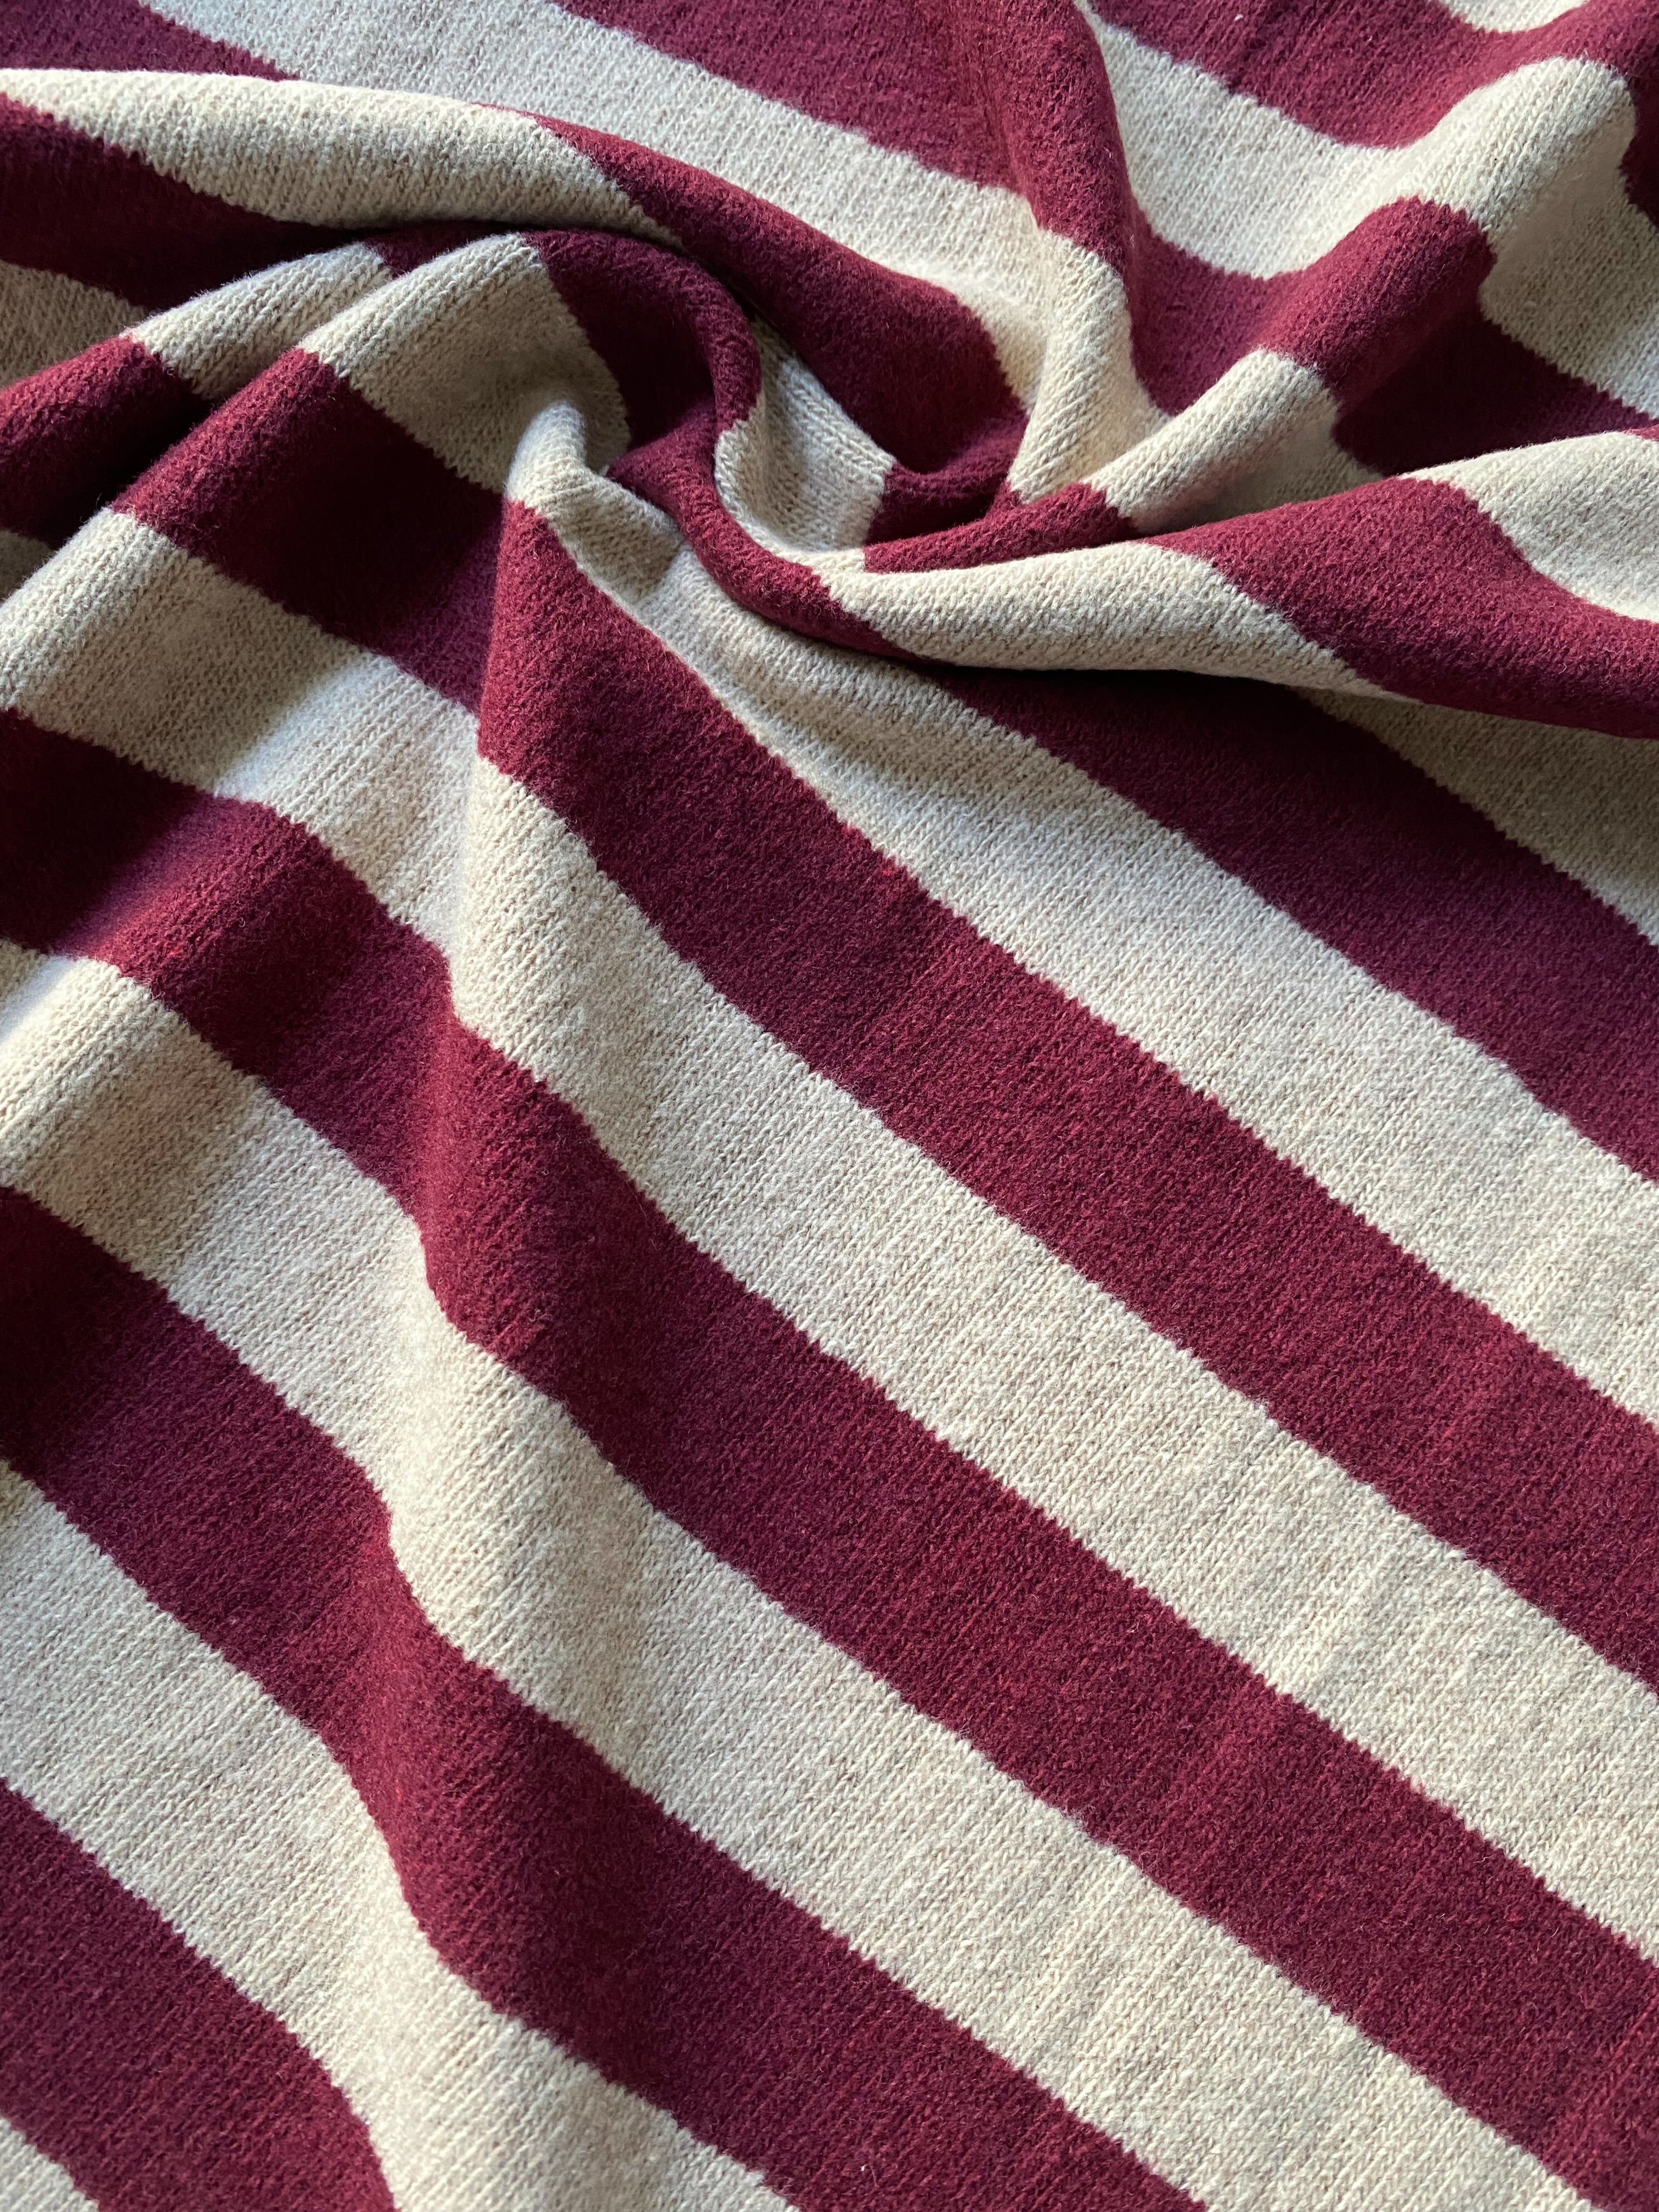 No. 1035 Soft knit beige wine red stripes